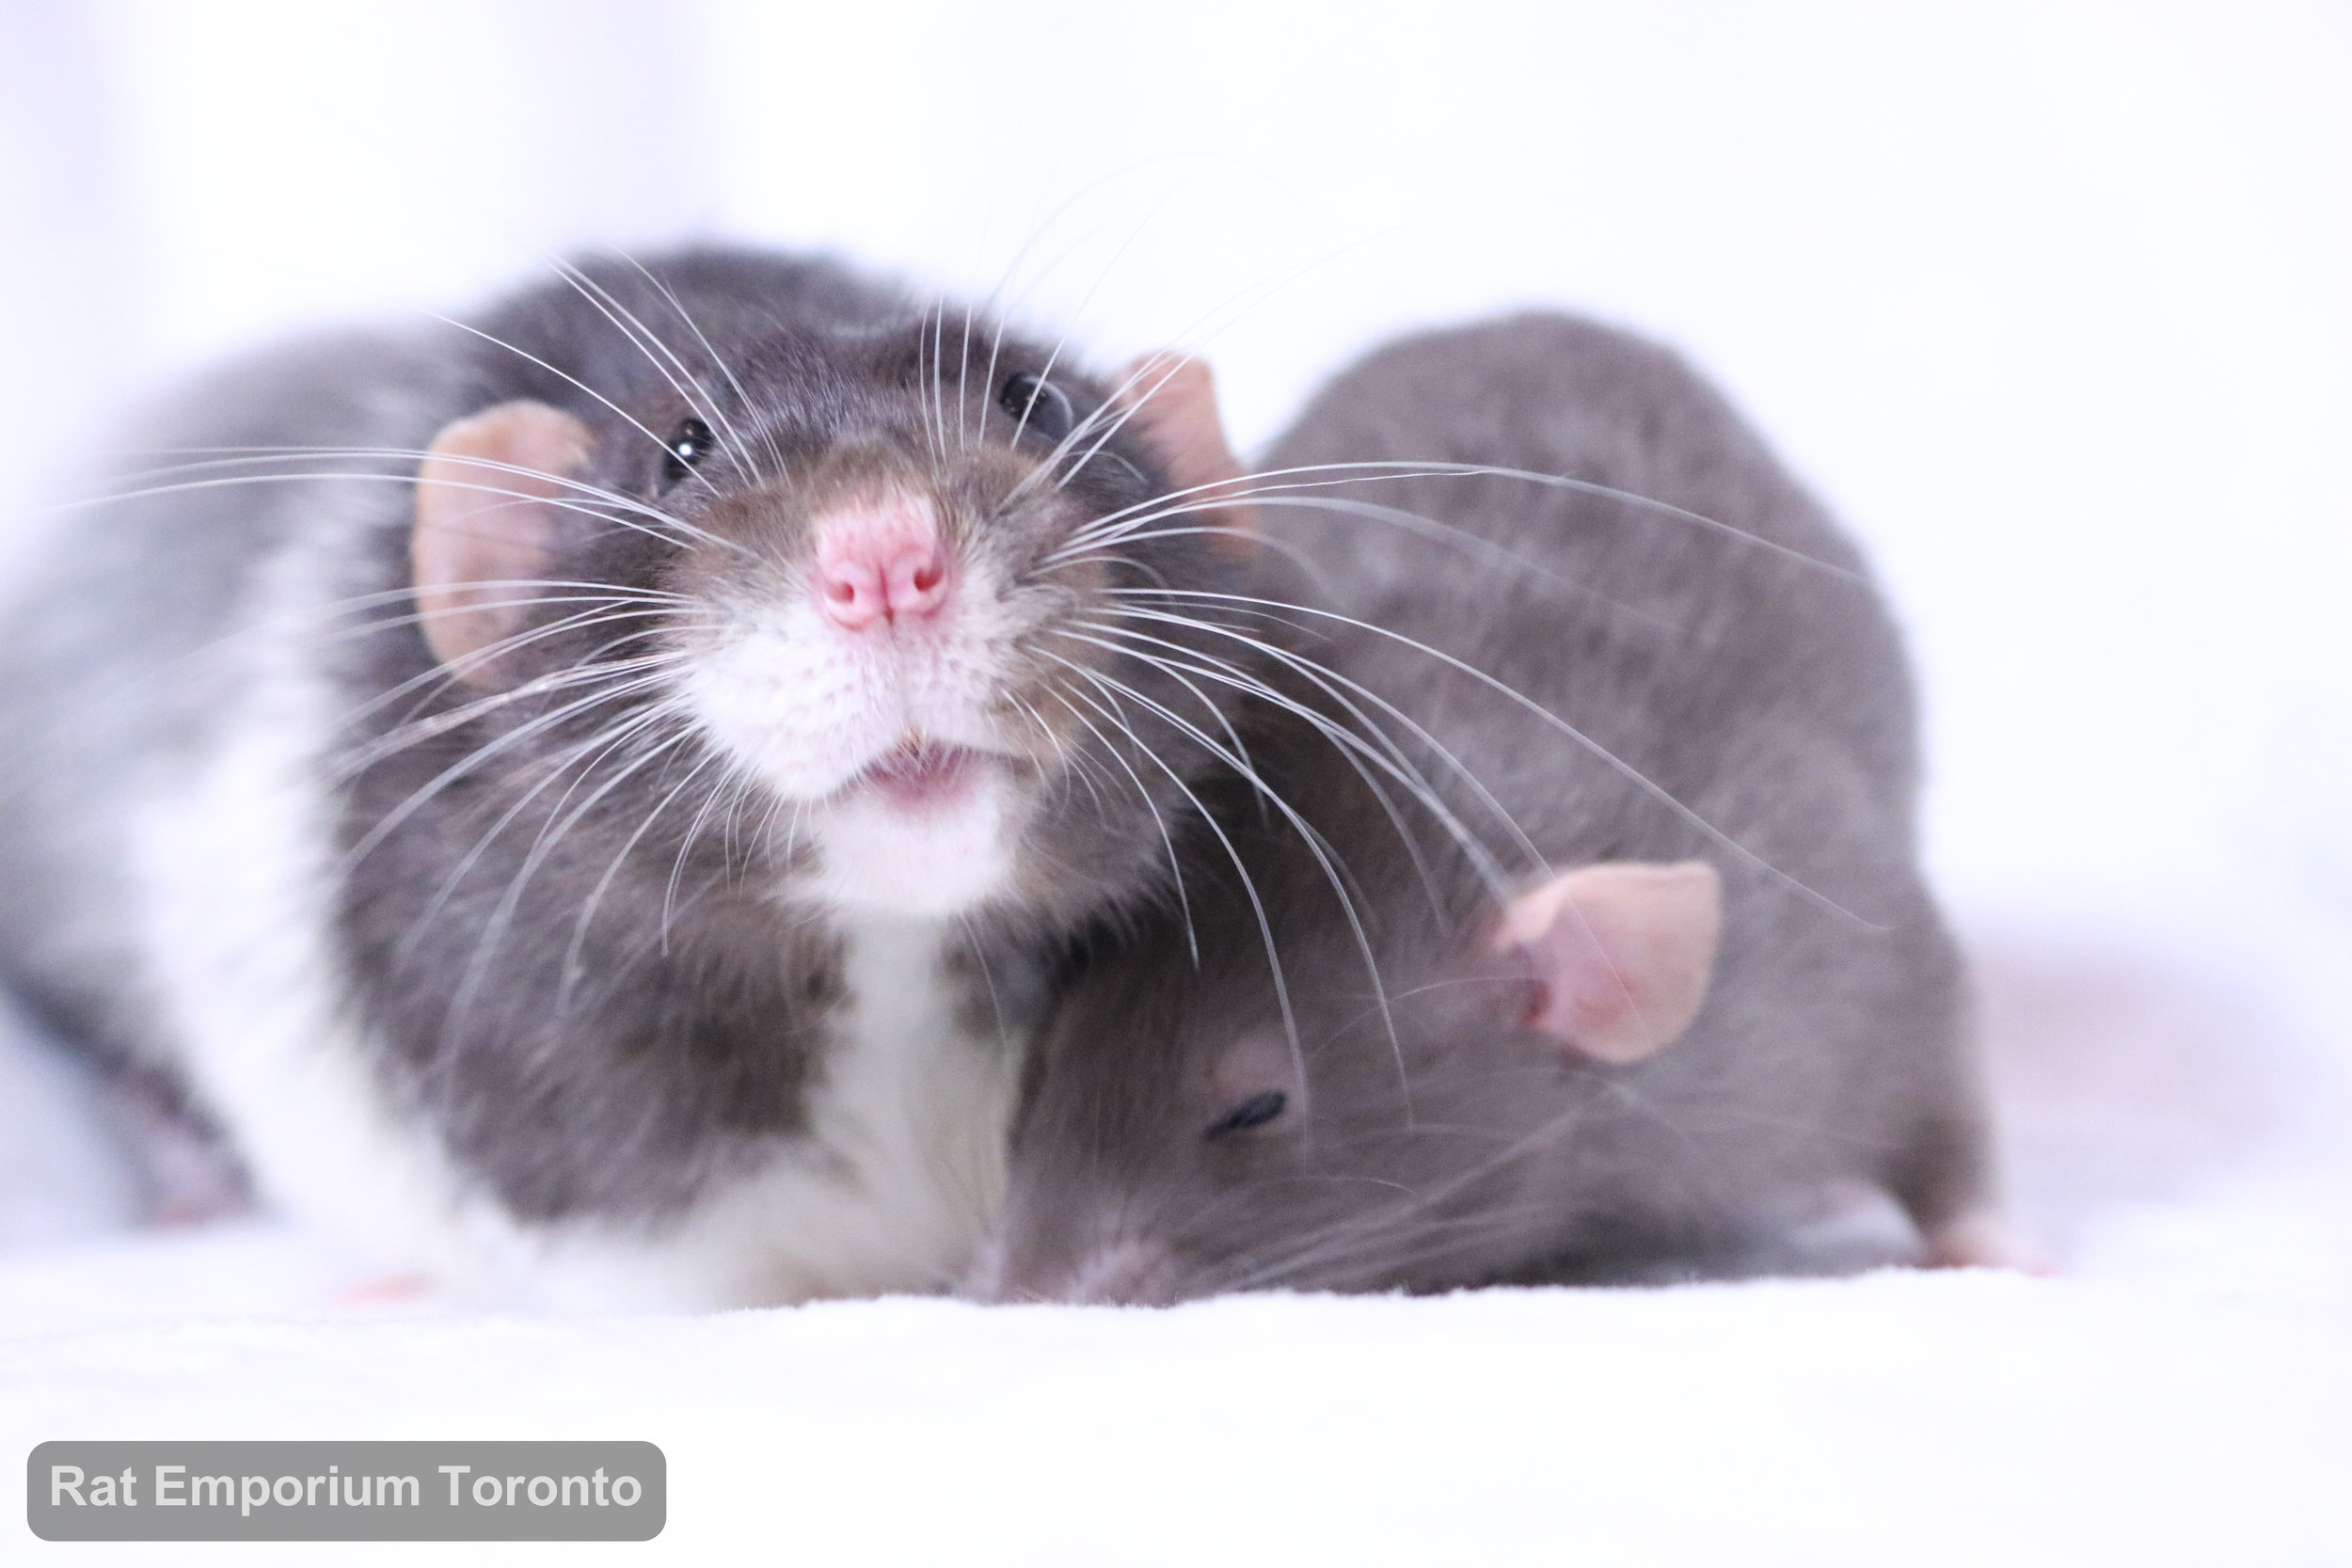 black and white variegated dumbo rat, mink dumbo rat, black silvermane dumbo rat - born and raised at Rat Emporium Toronto - pet rat breeder - adopt pet rats Toronto 